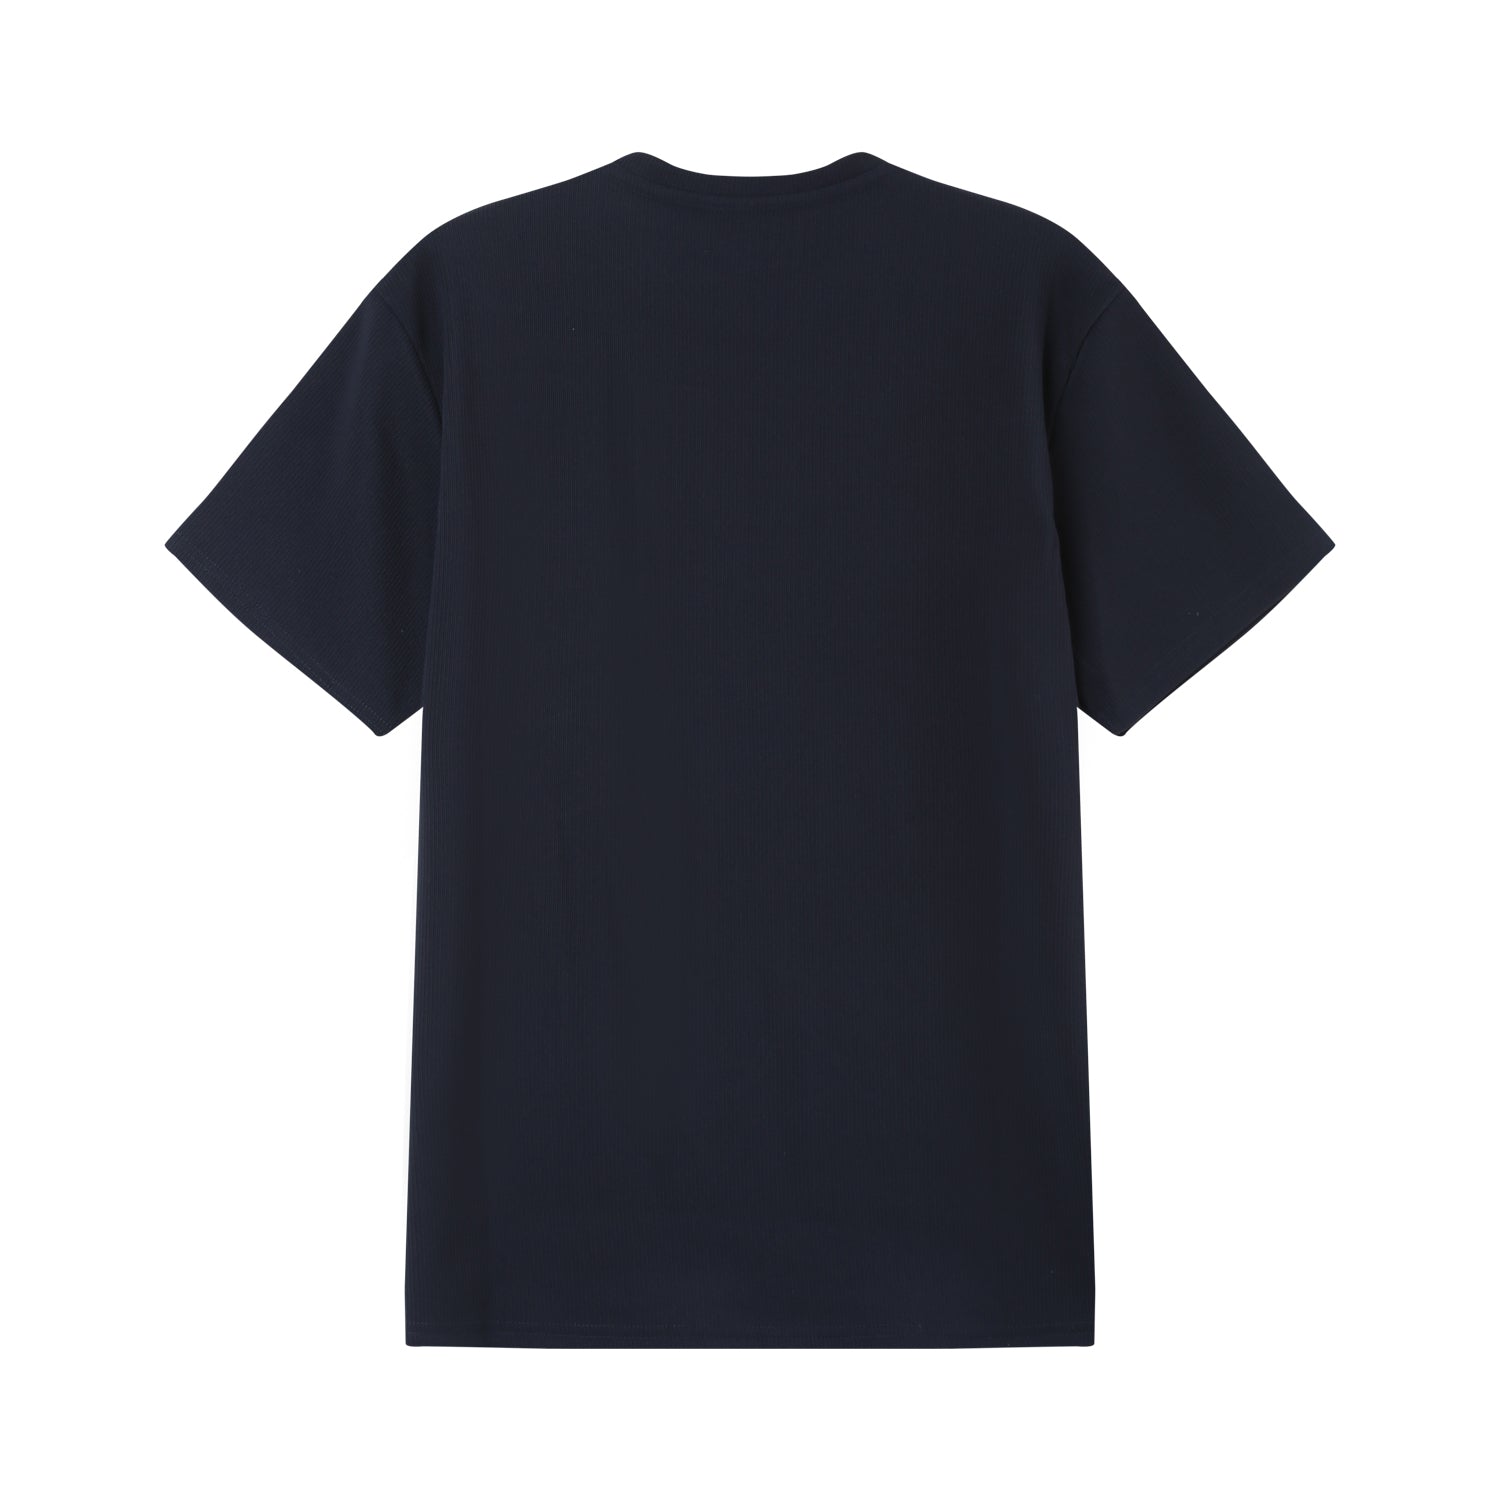 Pleated t-shirt short sleeves Dark blue